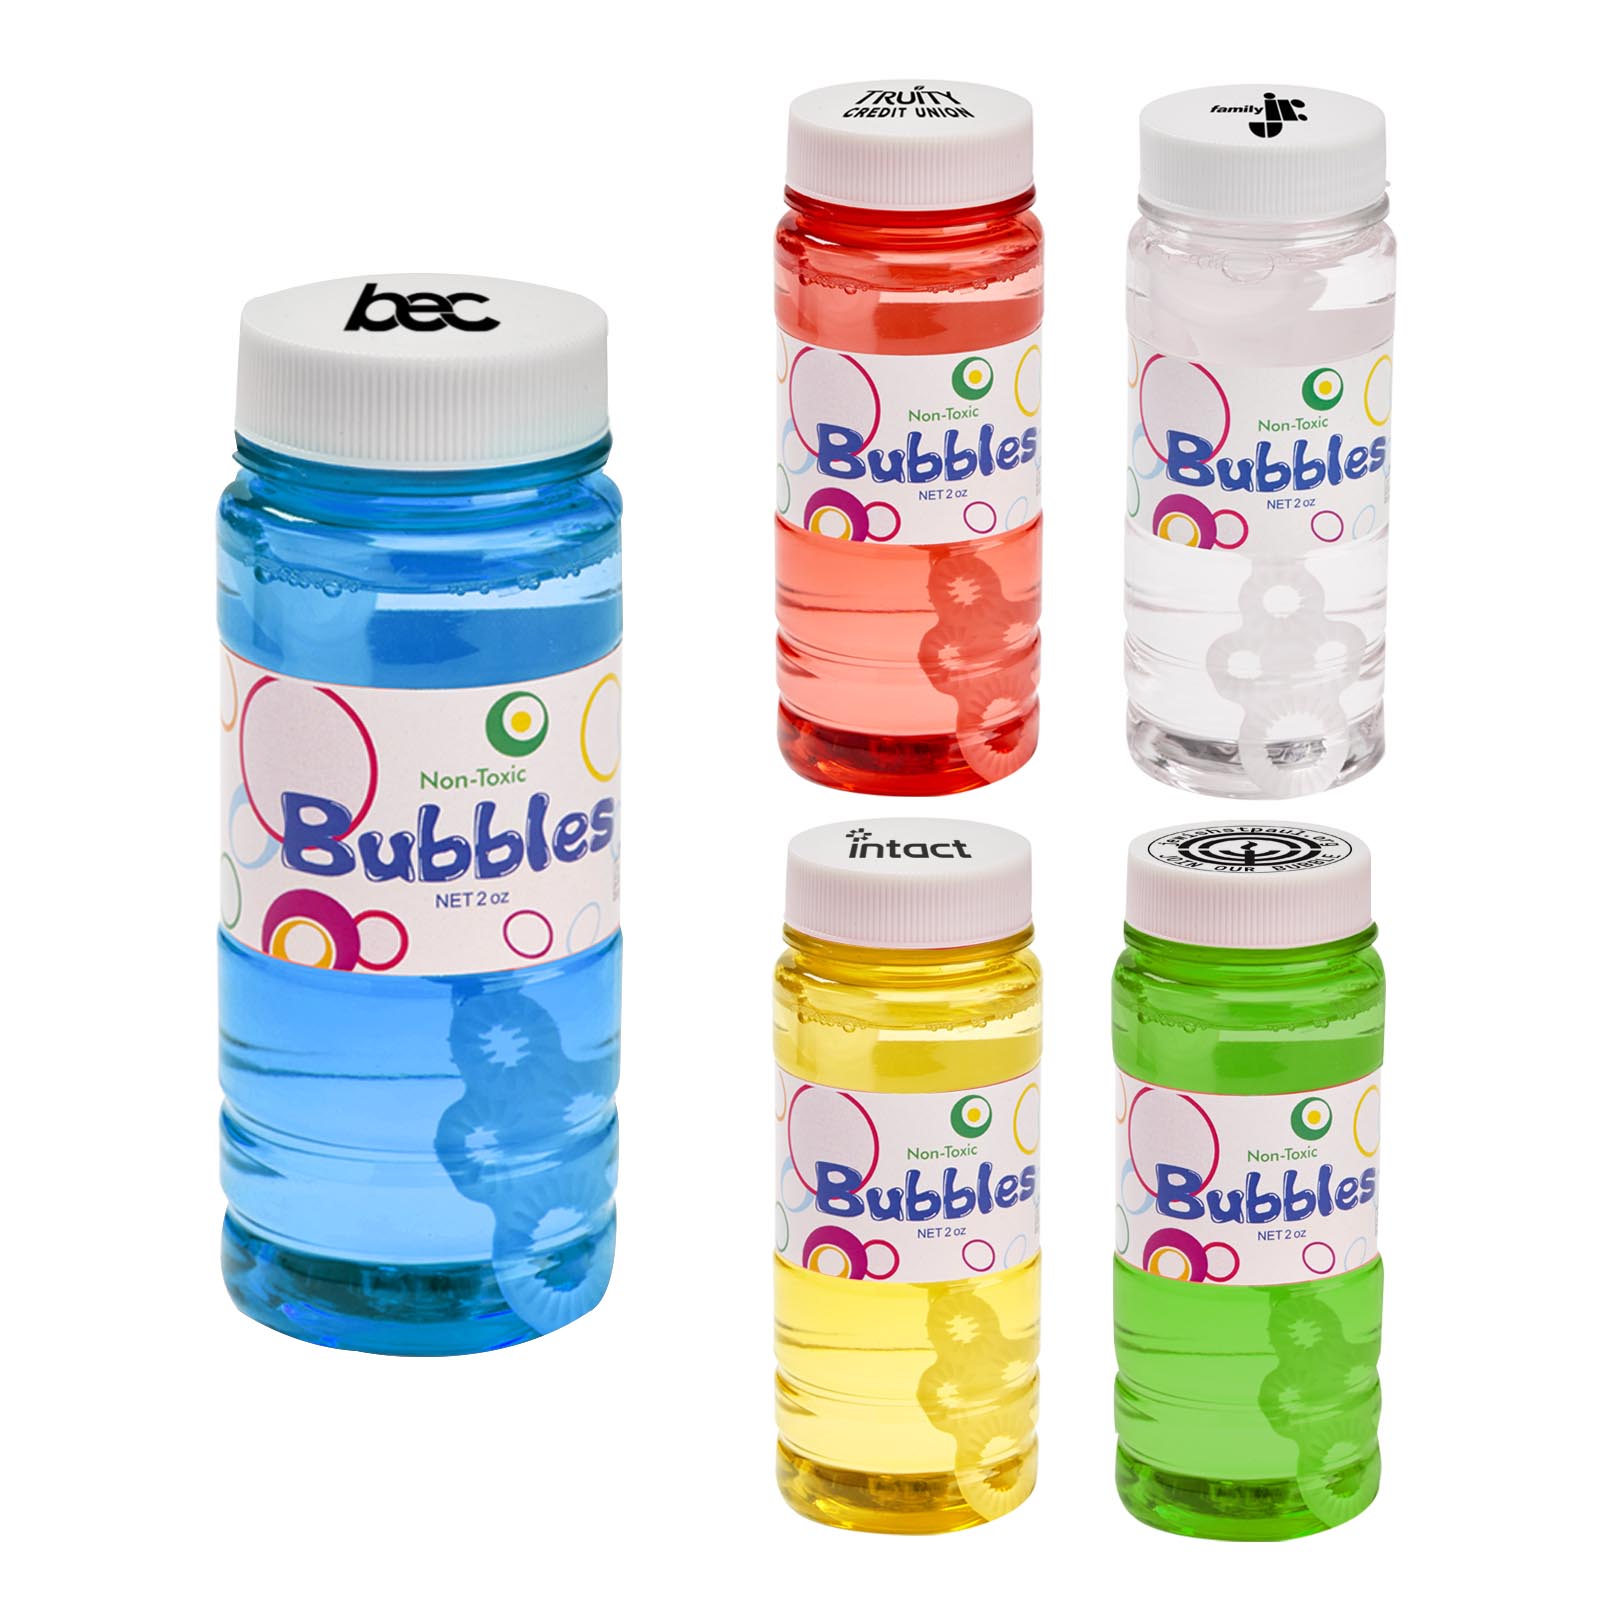 Translucent 4 oz. Bubbles Imprinted on Cap